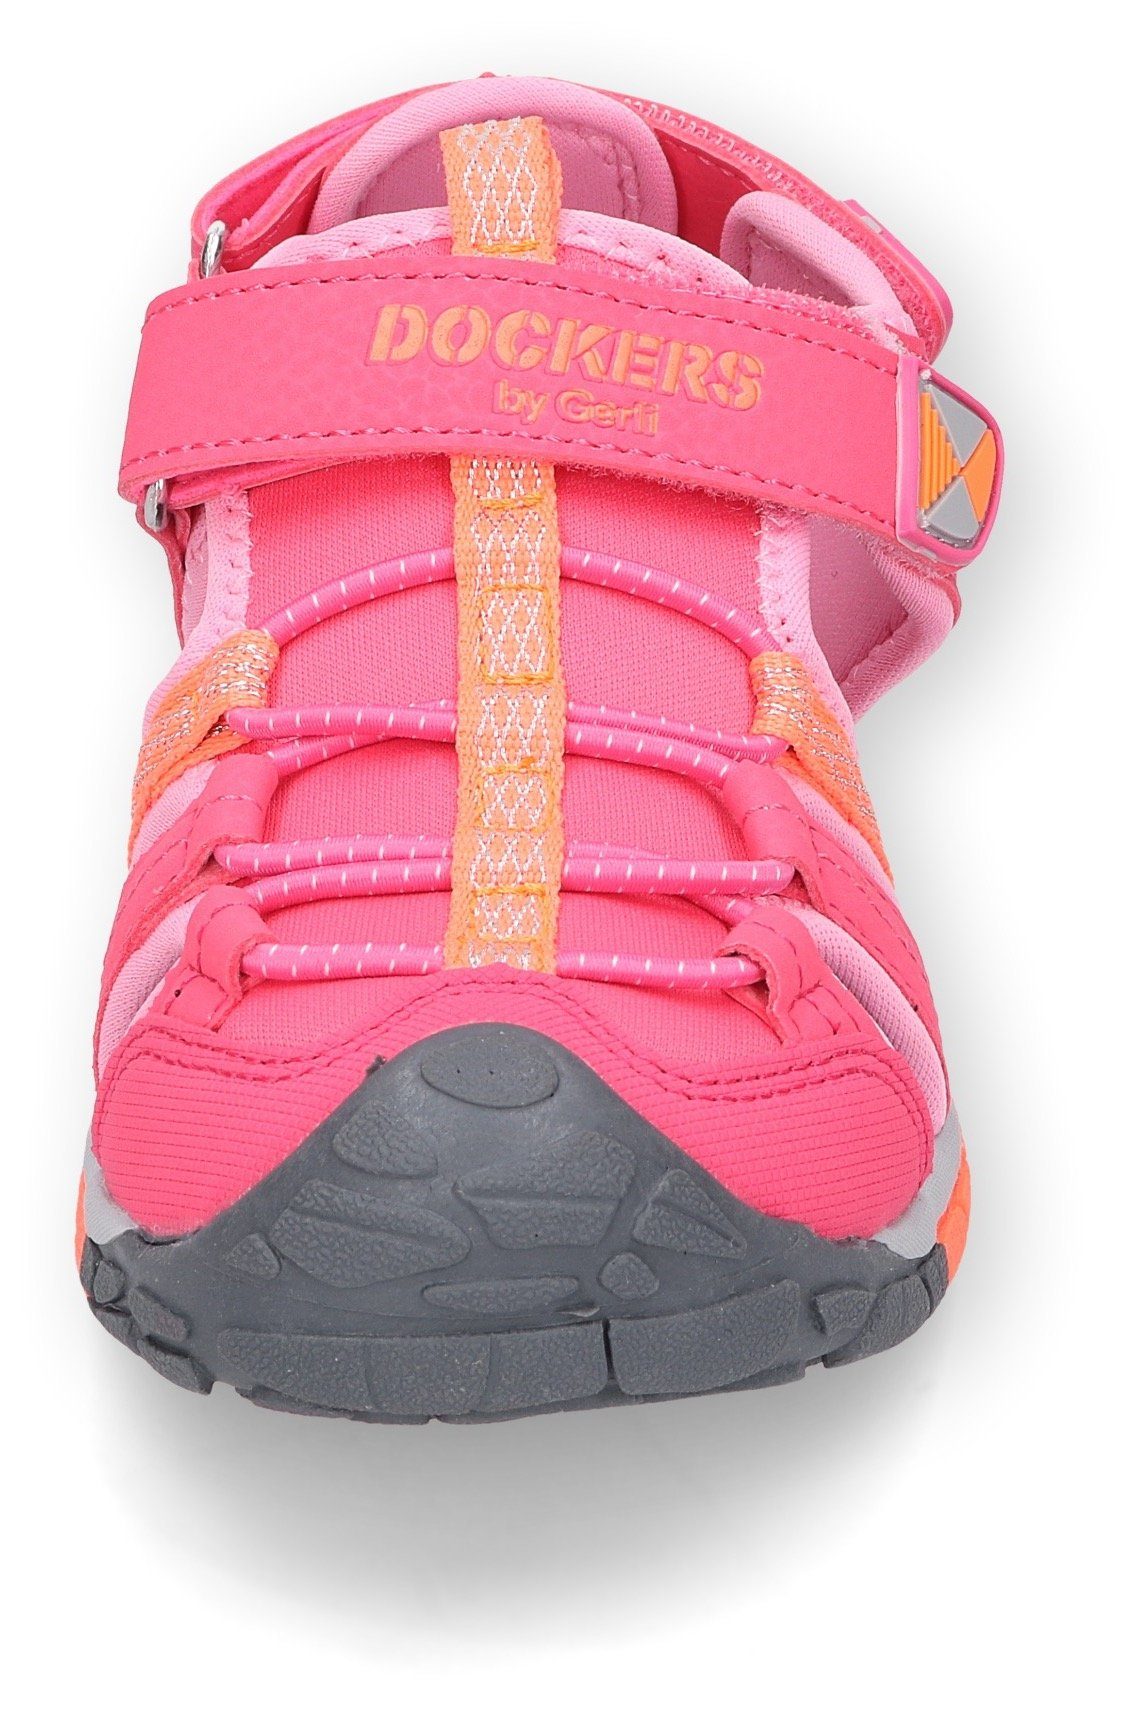 Dockers by Details mit kontrastfarbenen Gerli Riemchensandale pink-rosa